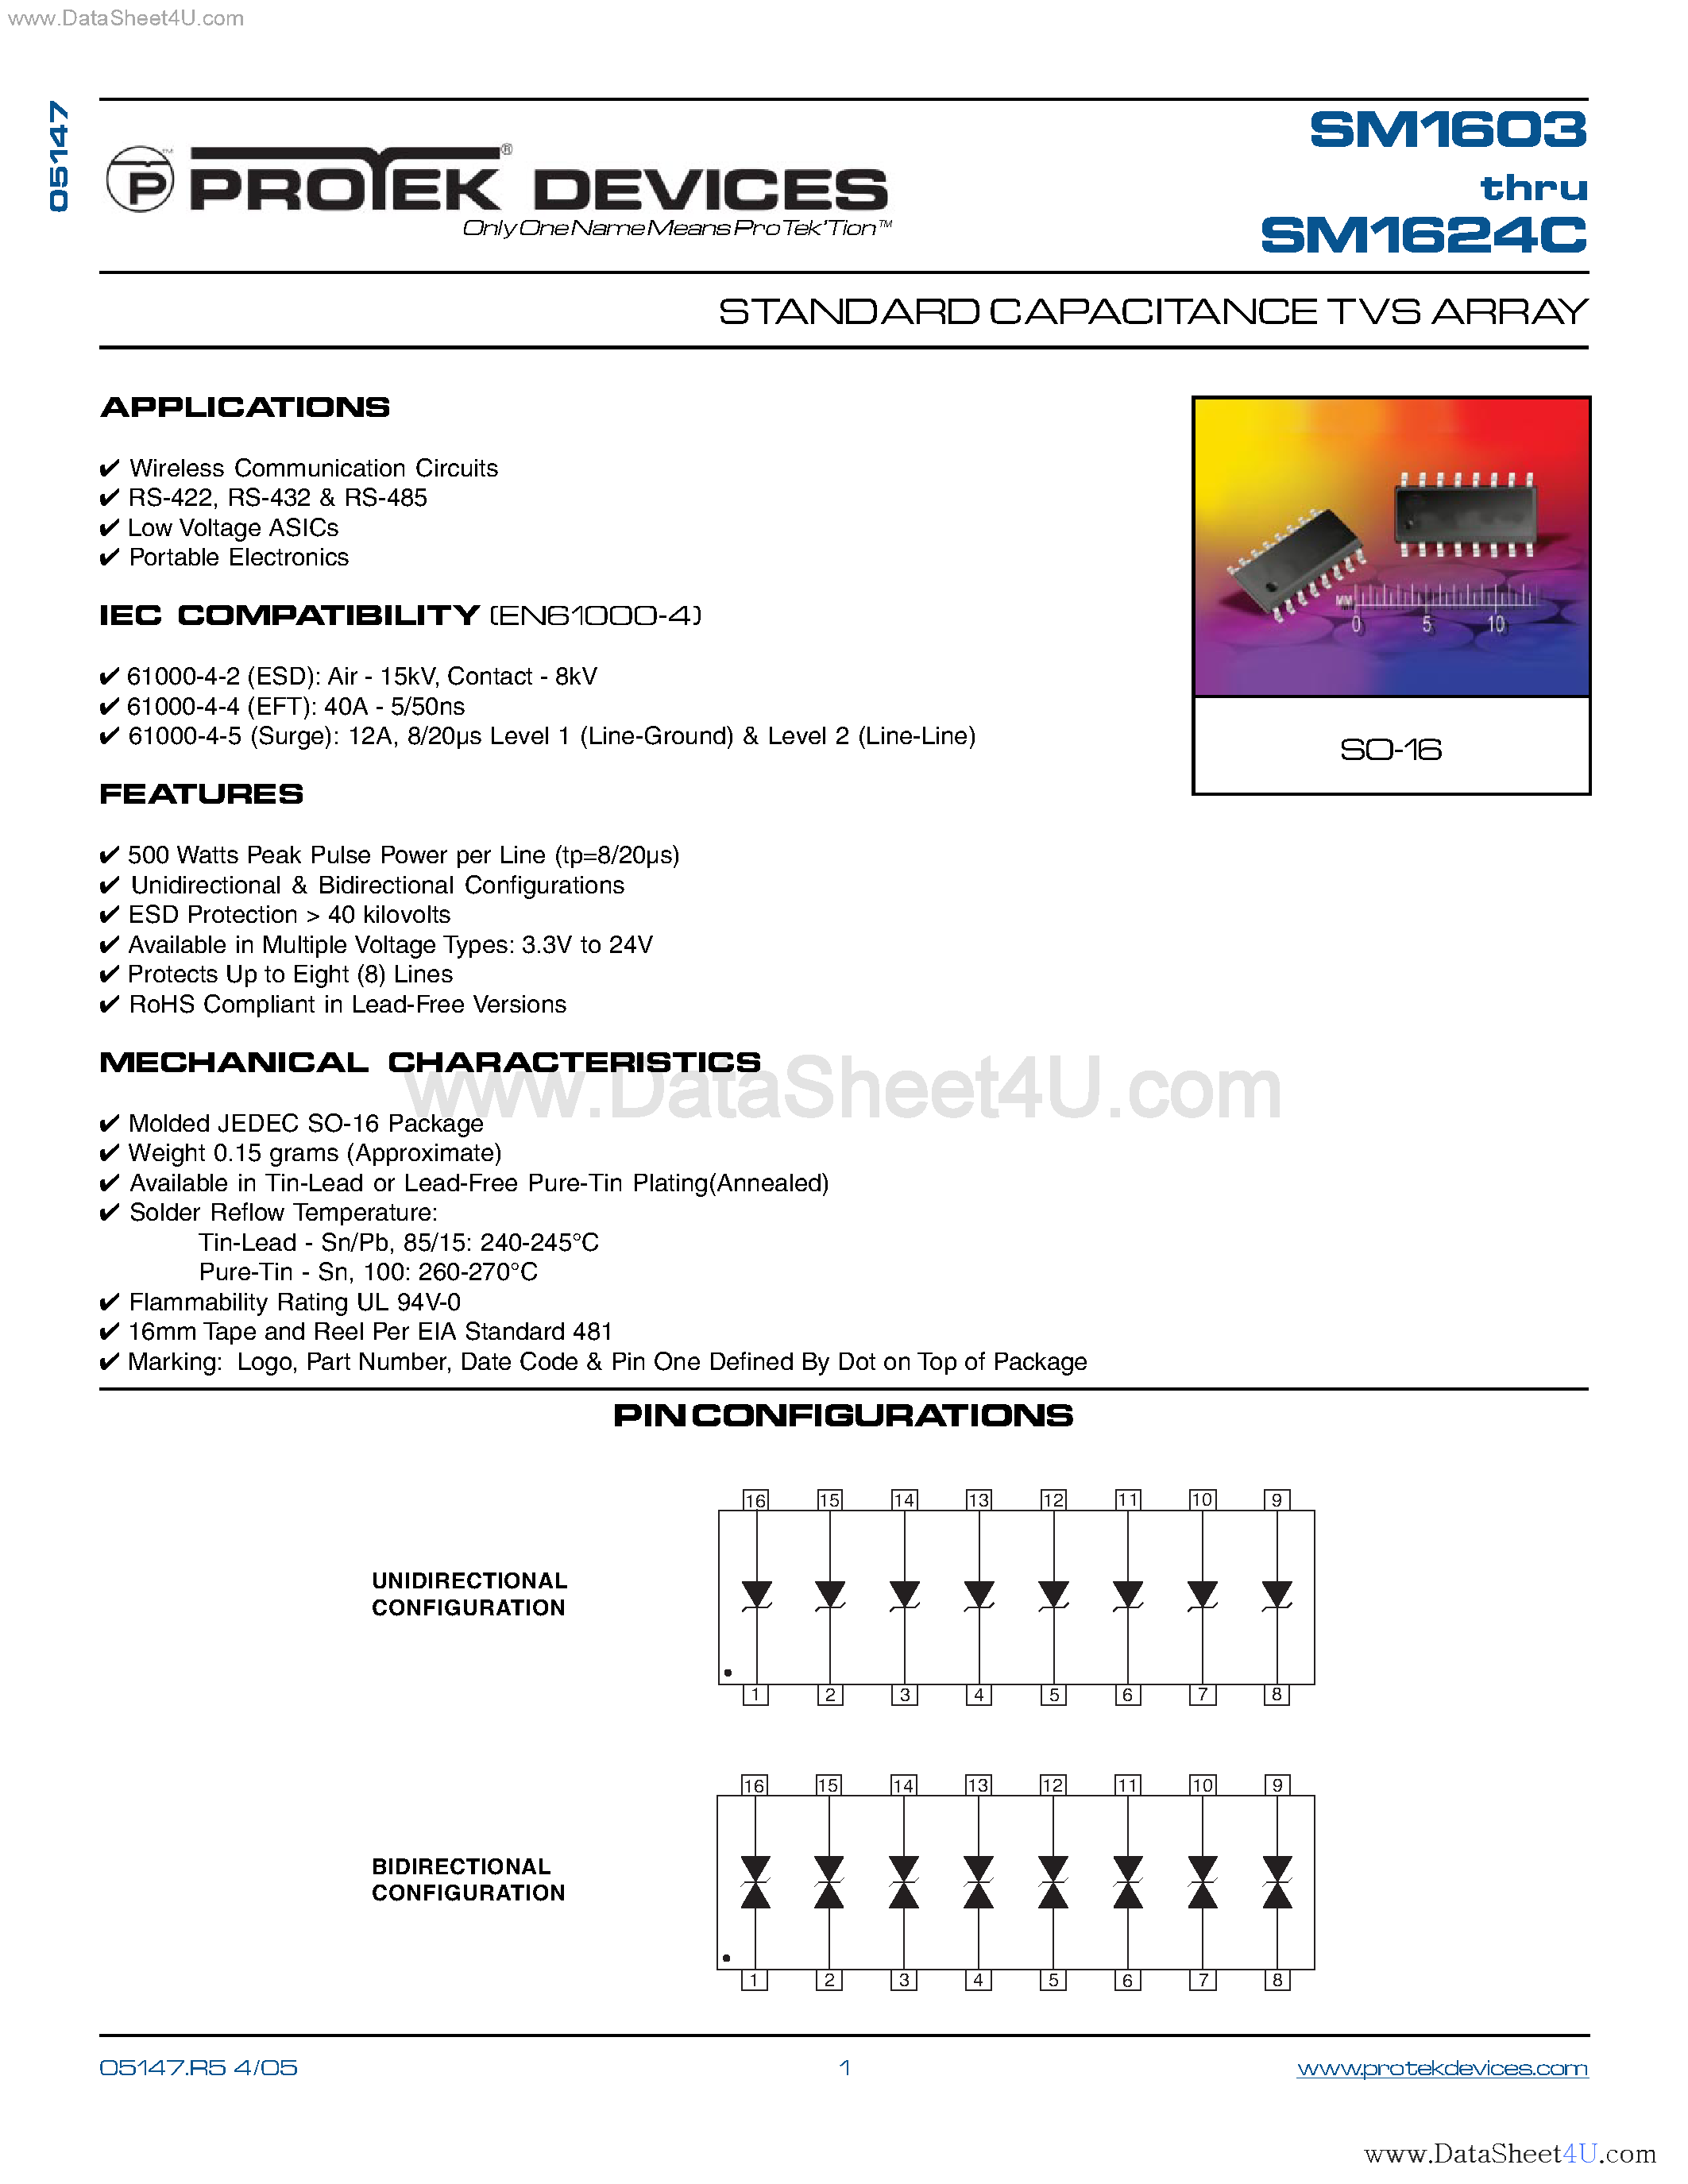 Datasheet SM1603 - (SM1603 - SM1624) STANDARD CAPACITANCE TVS ARRAY page 1